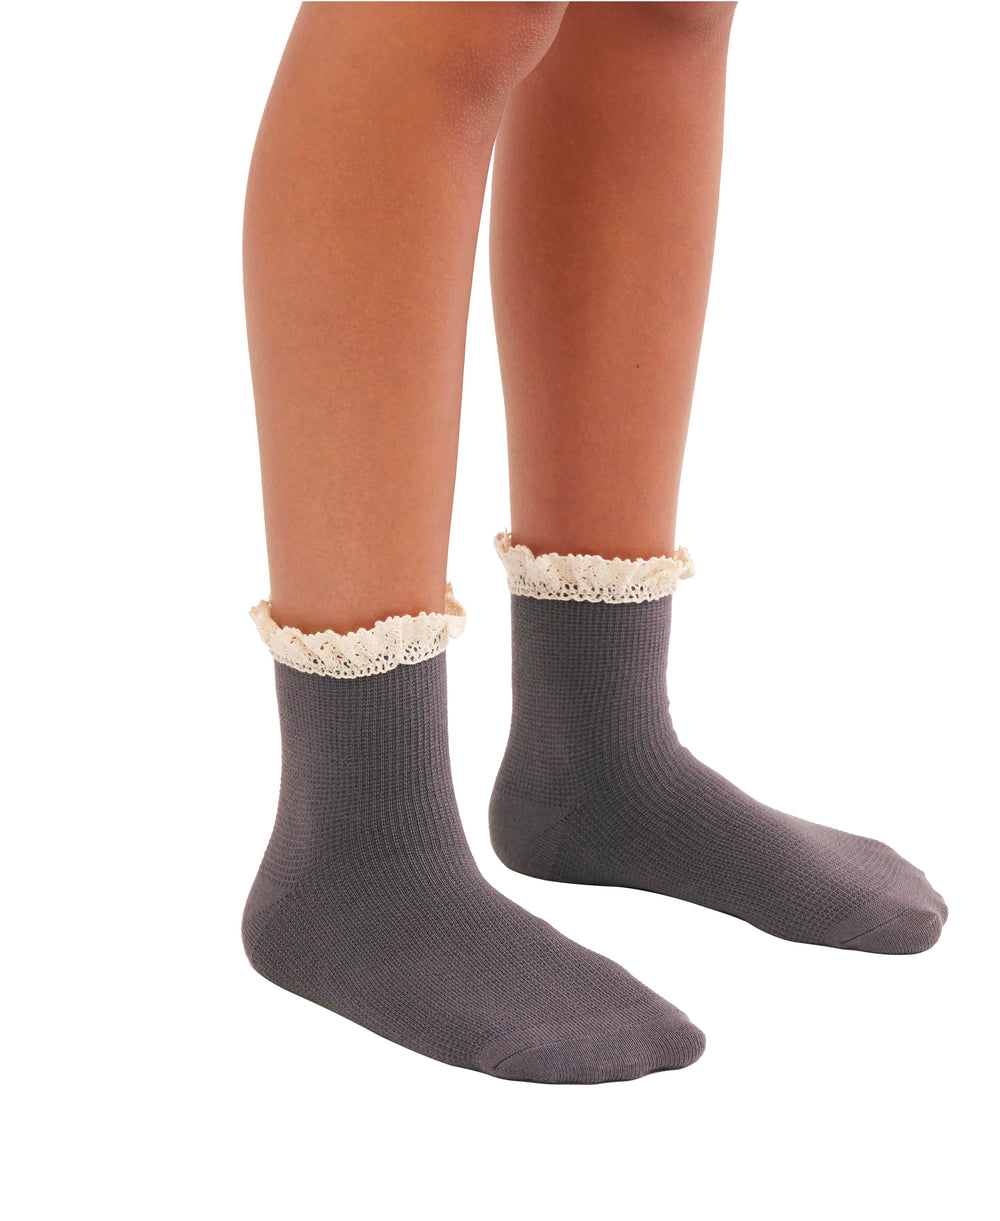 Waffle Knit Ankle Socks in Shark - Madison&